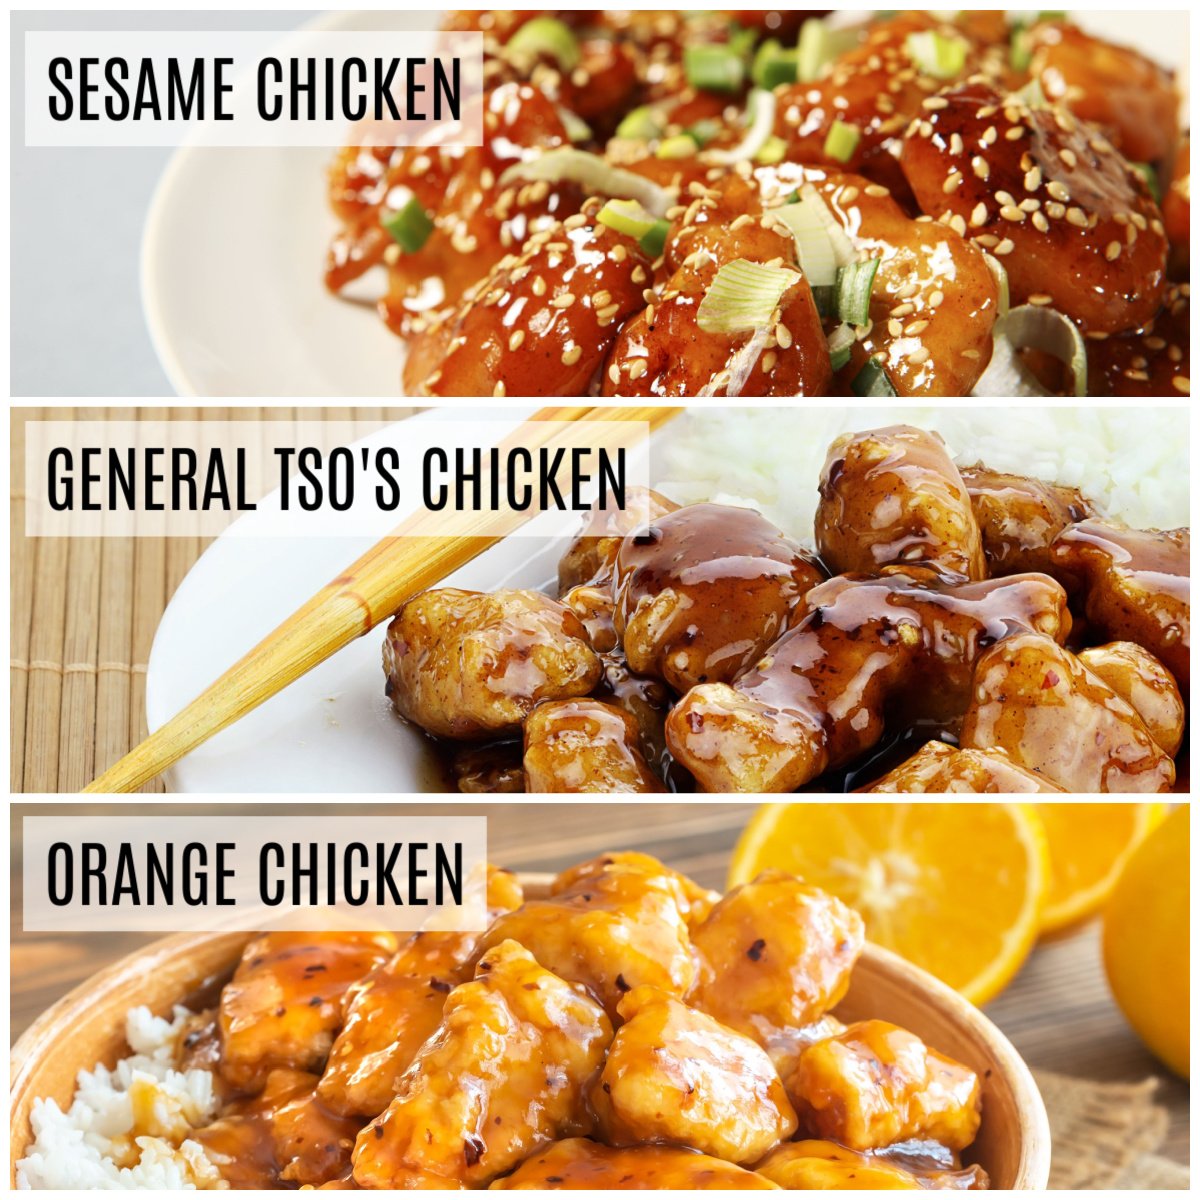 sesame chicken vs general tso vs orange chicken